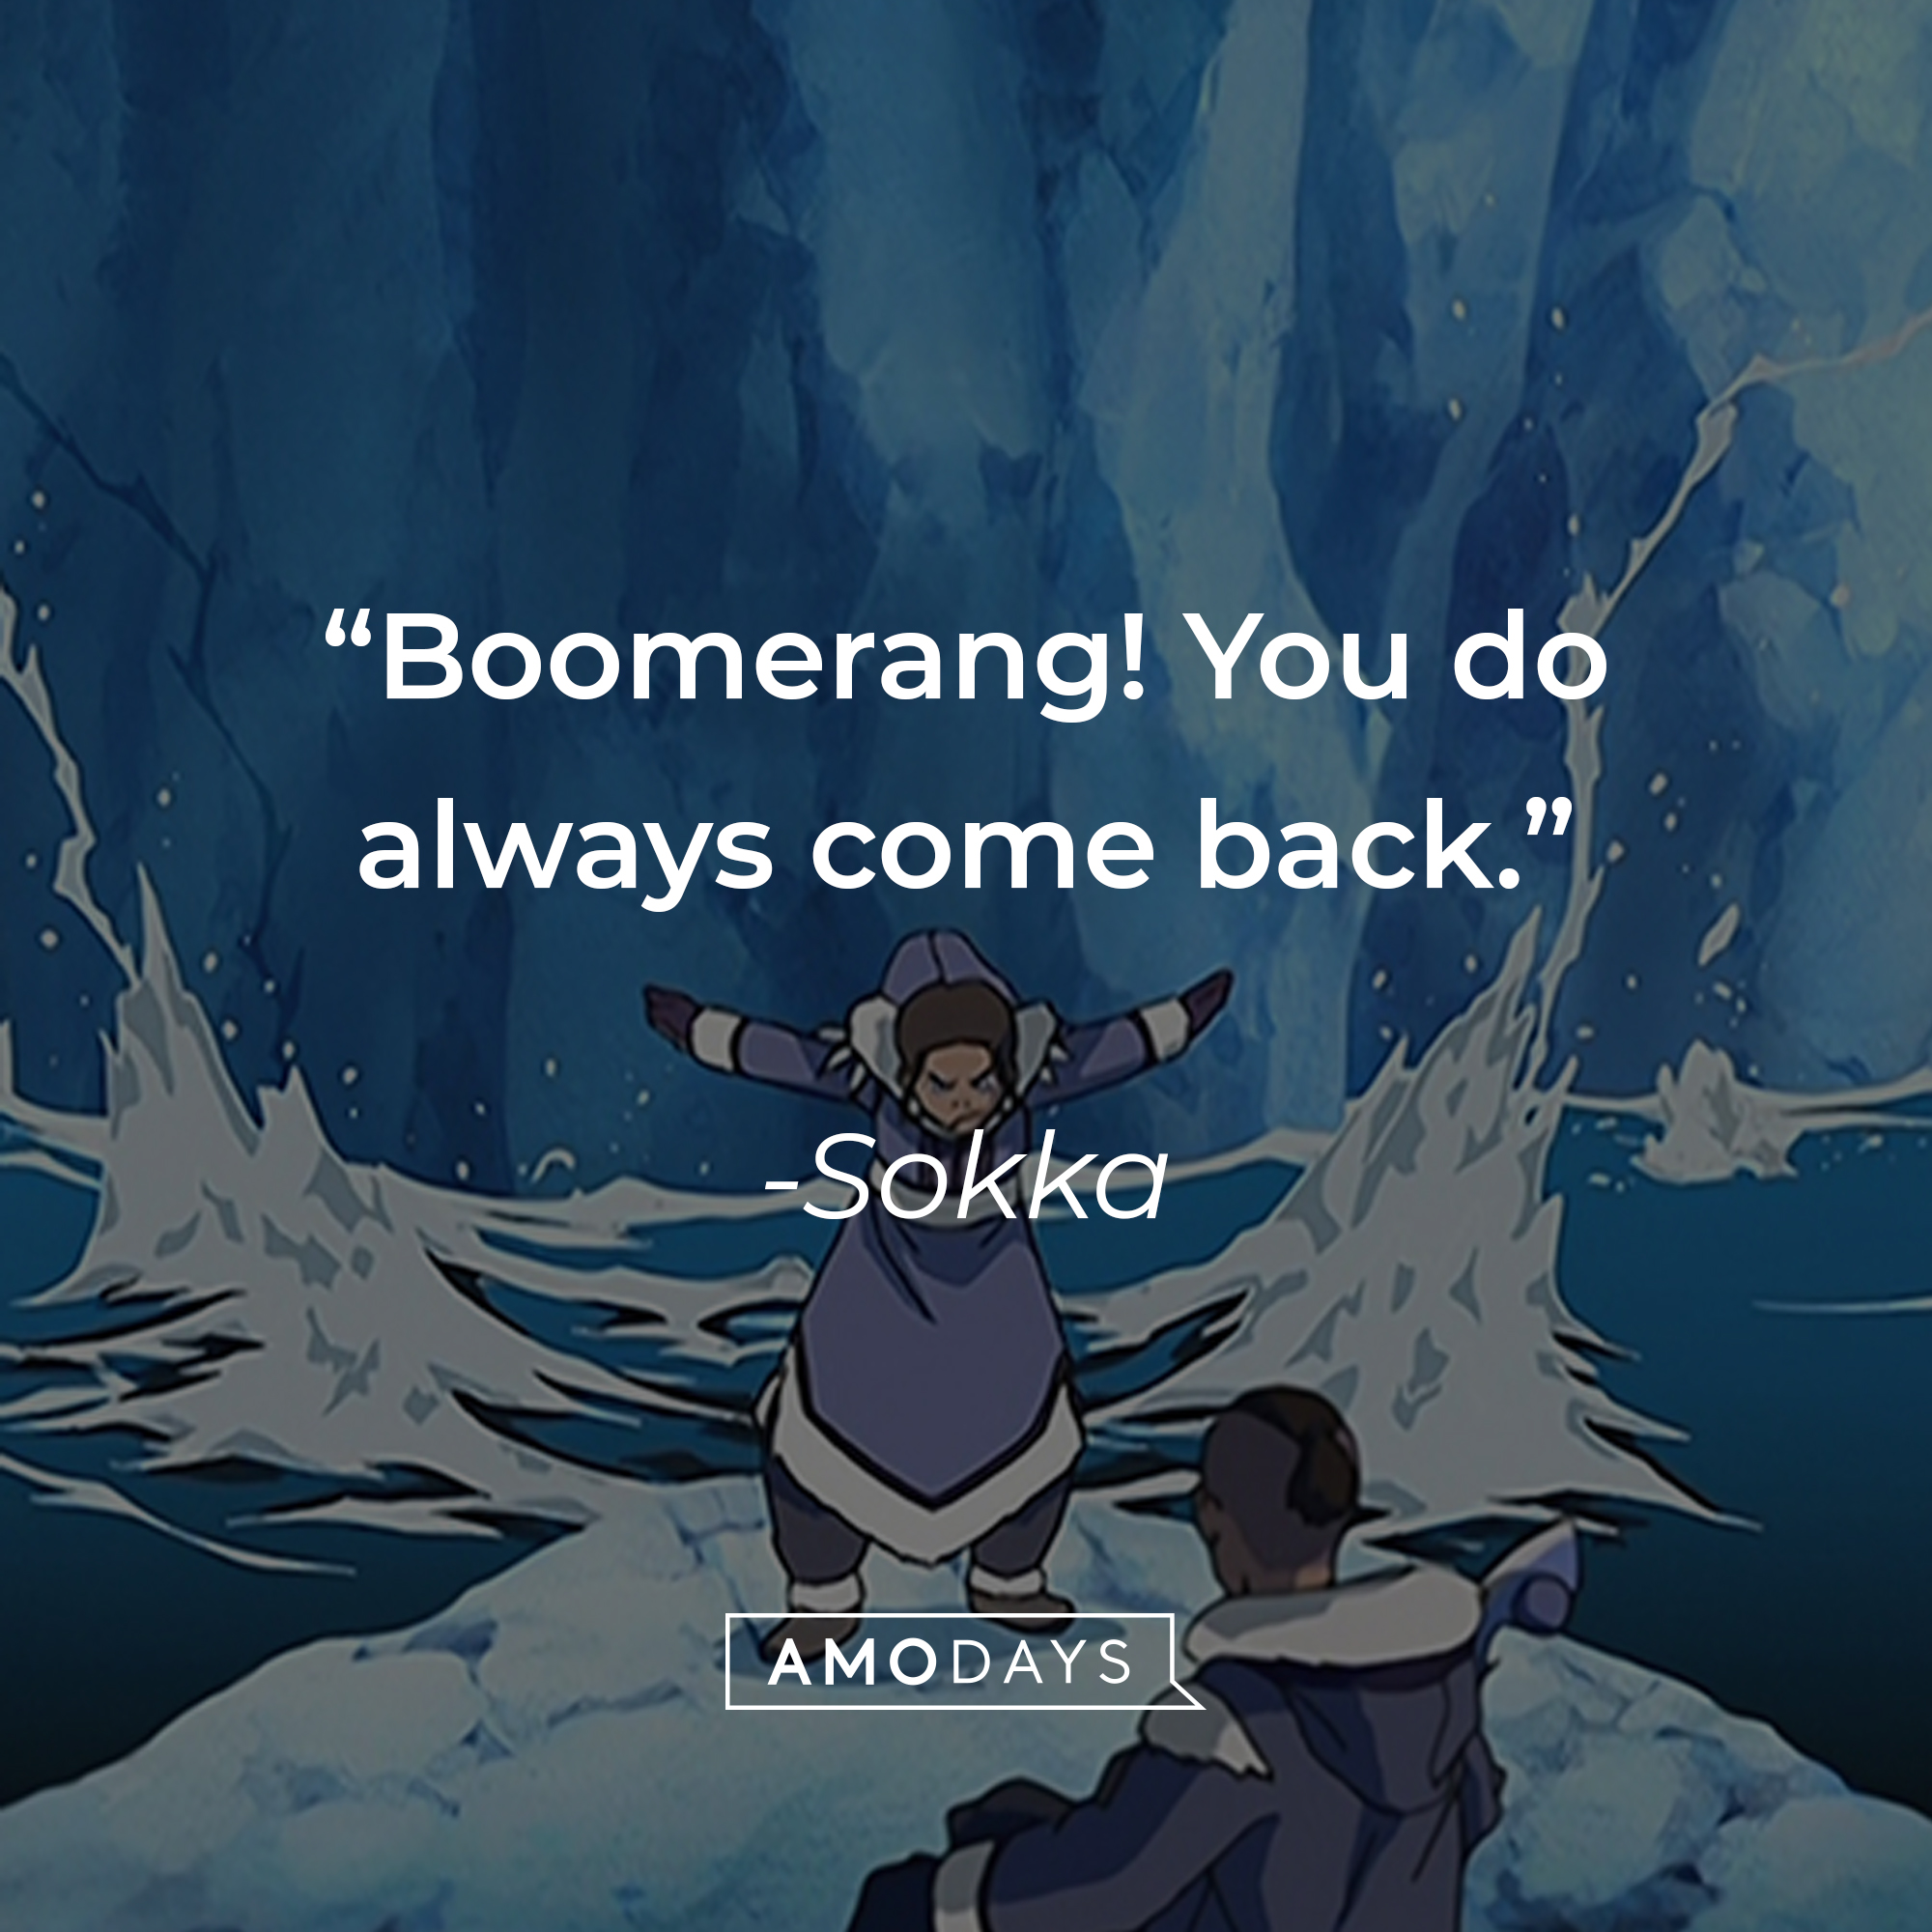 Sokka's quote: "Boomerang! You do always come back." | Source: facebook.com/avatarthelastairbender